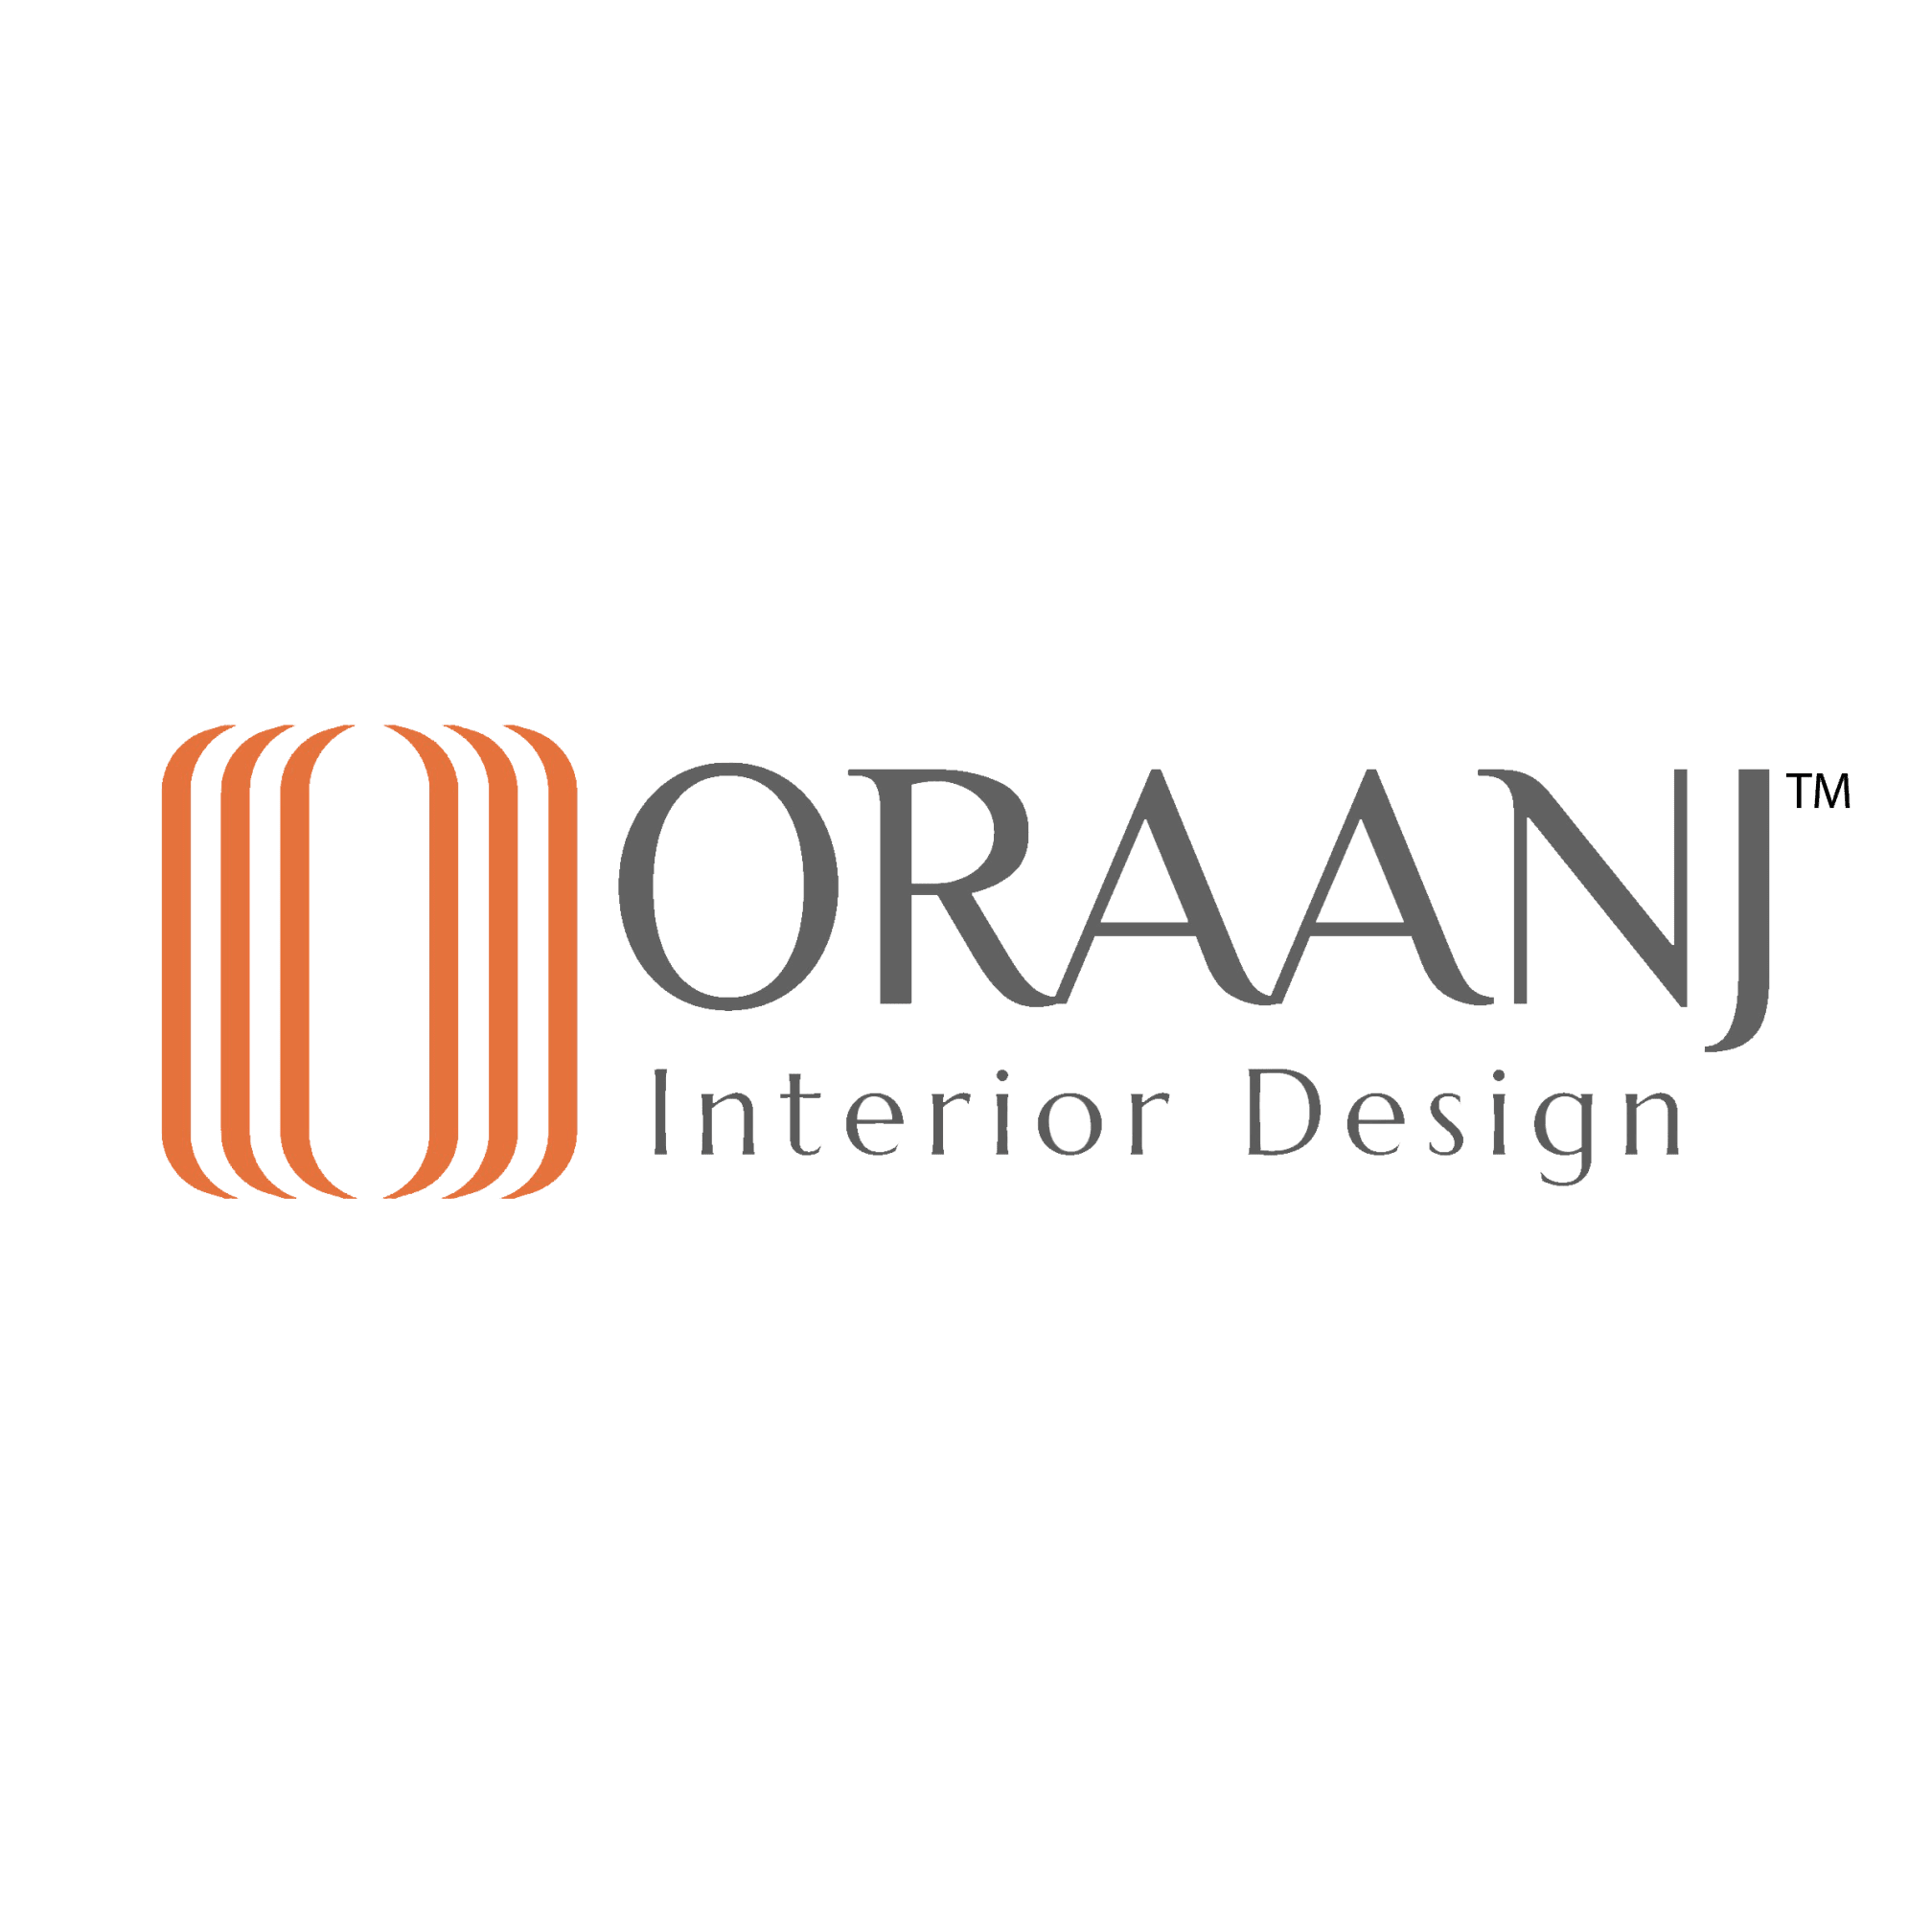 LOGO Oraanj Interior Design London Harrow 07448 803051